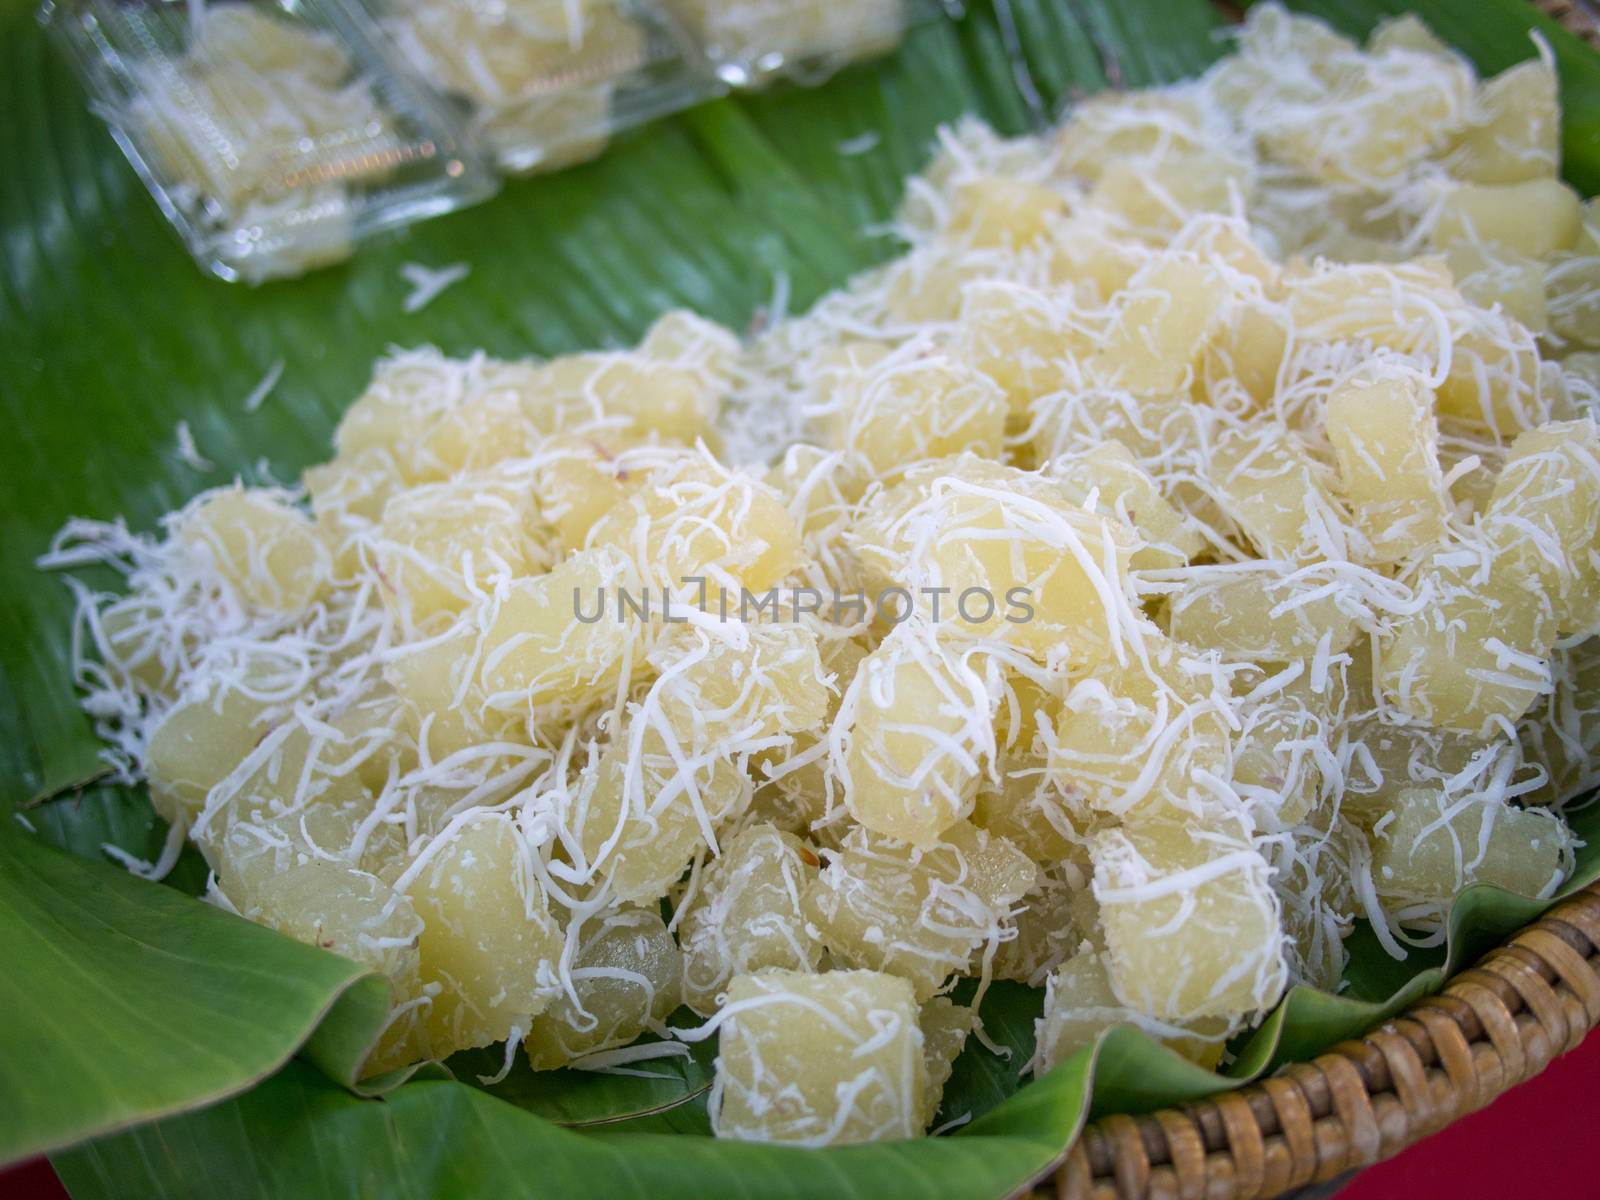 Steamed cassava cake, Thai traditional dessert